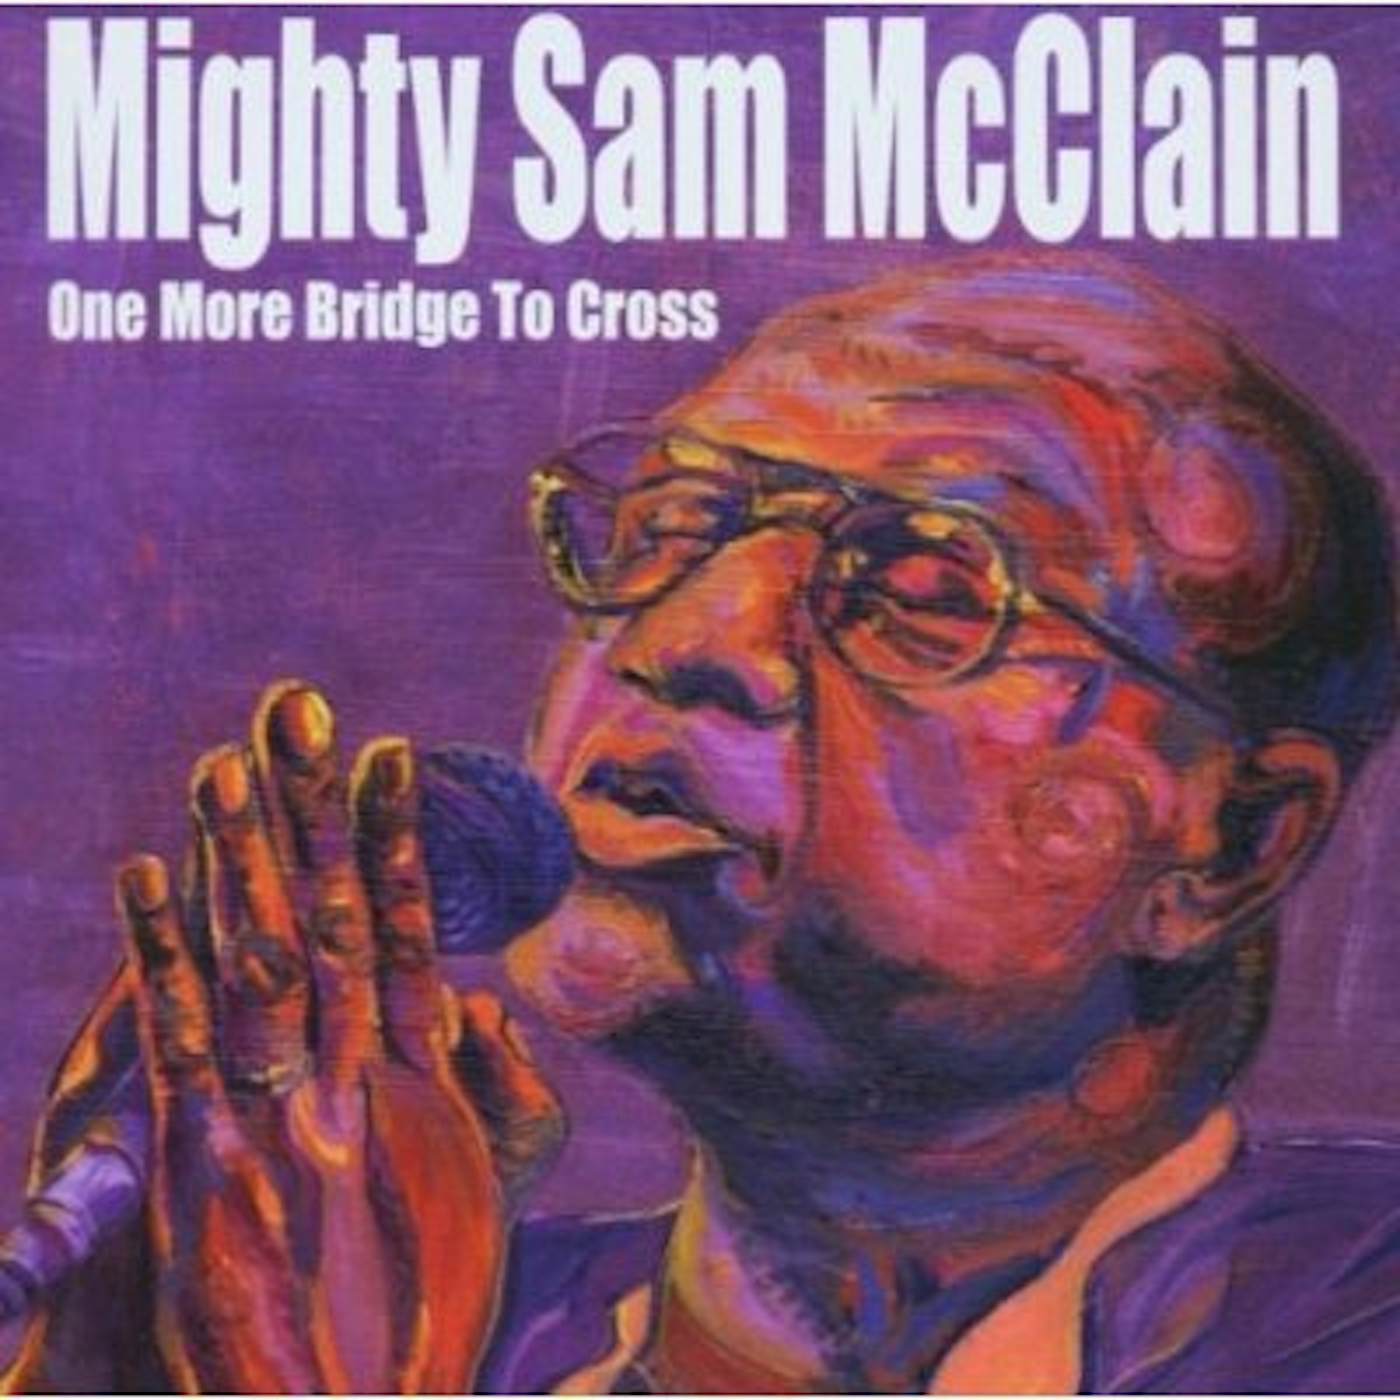 Mighty Sam McClain ONE MORE BRIDGE TO CROSS CD